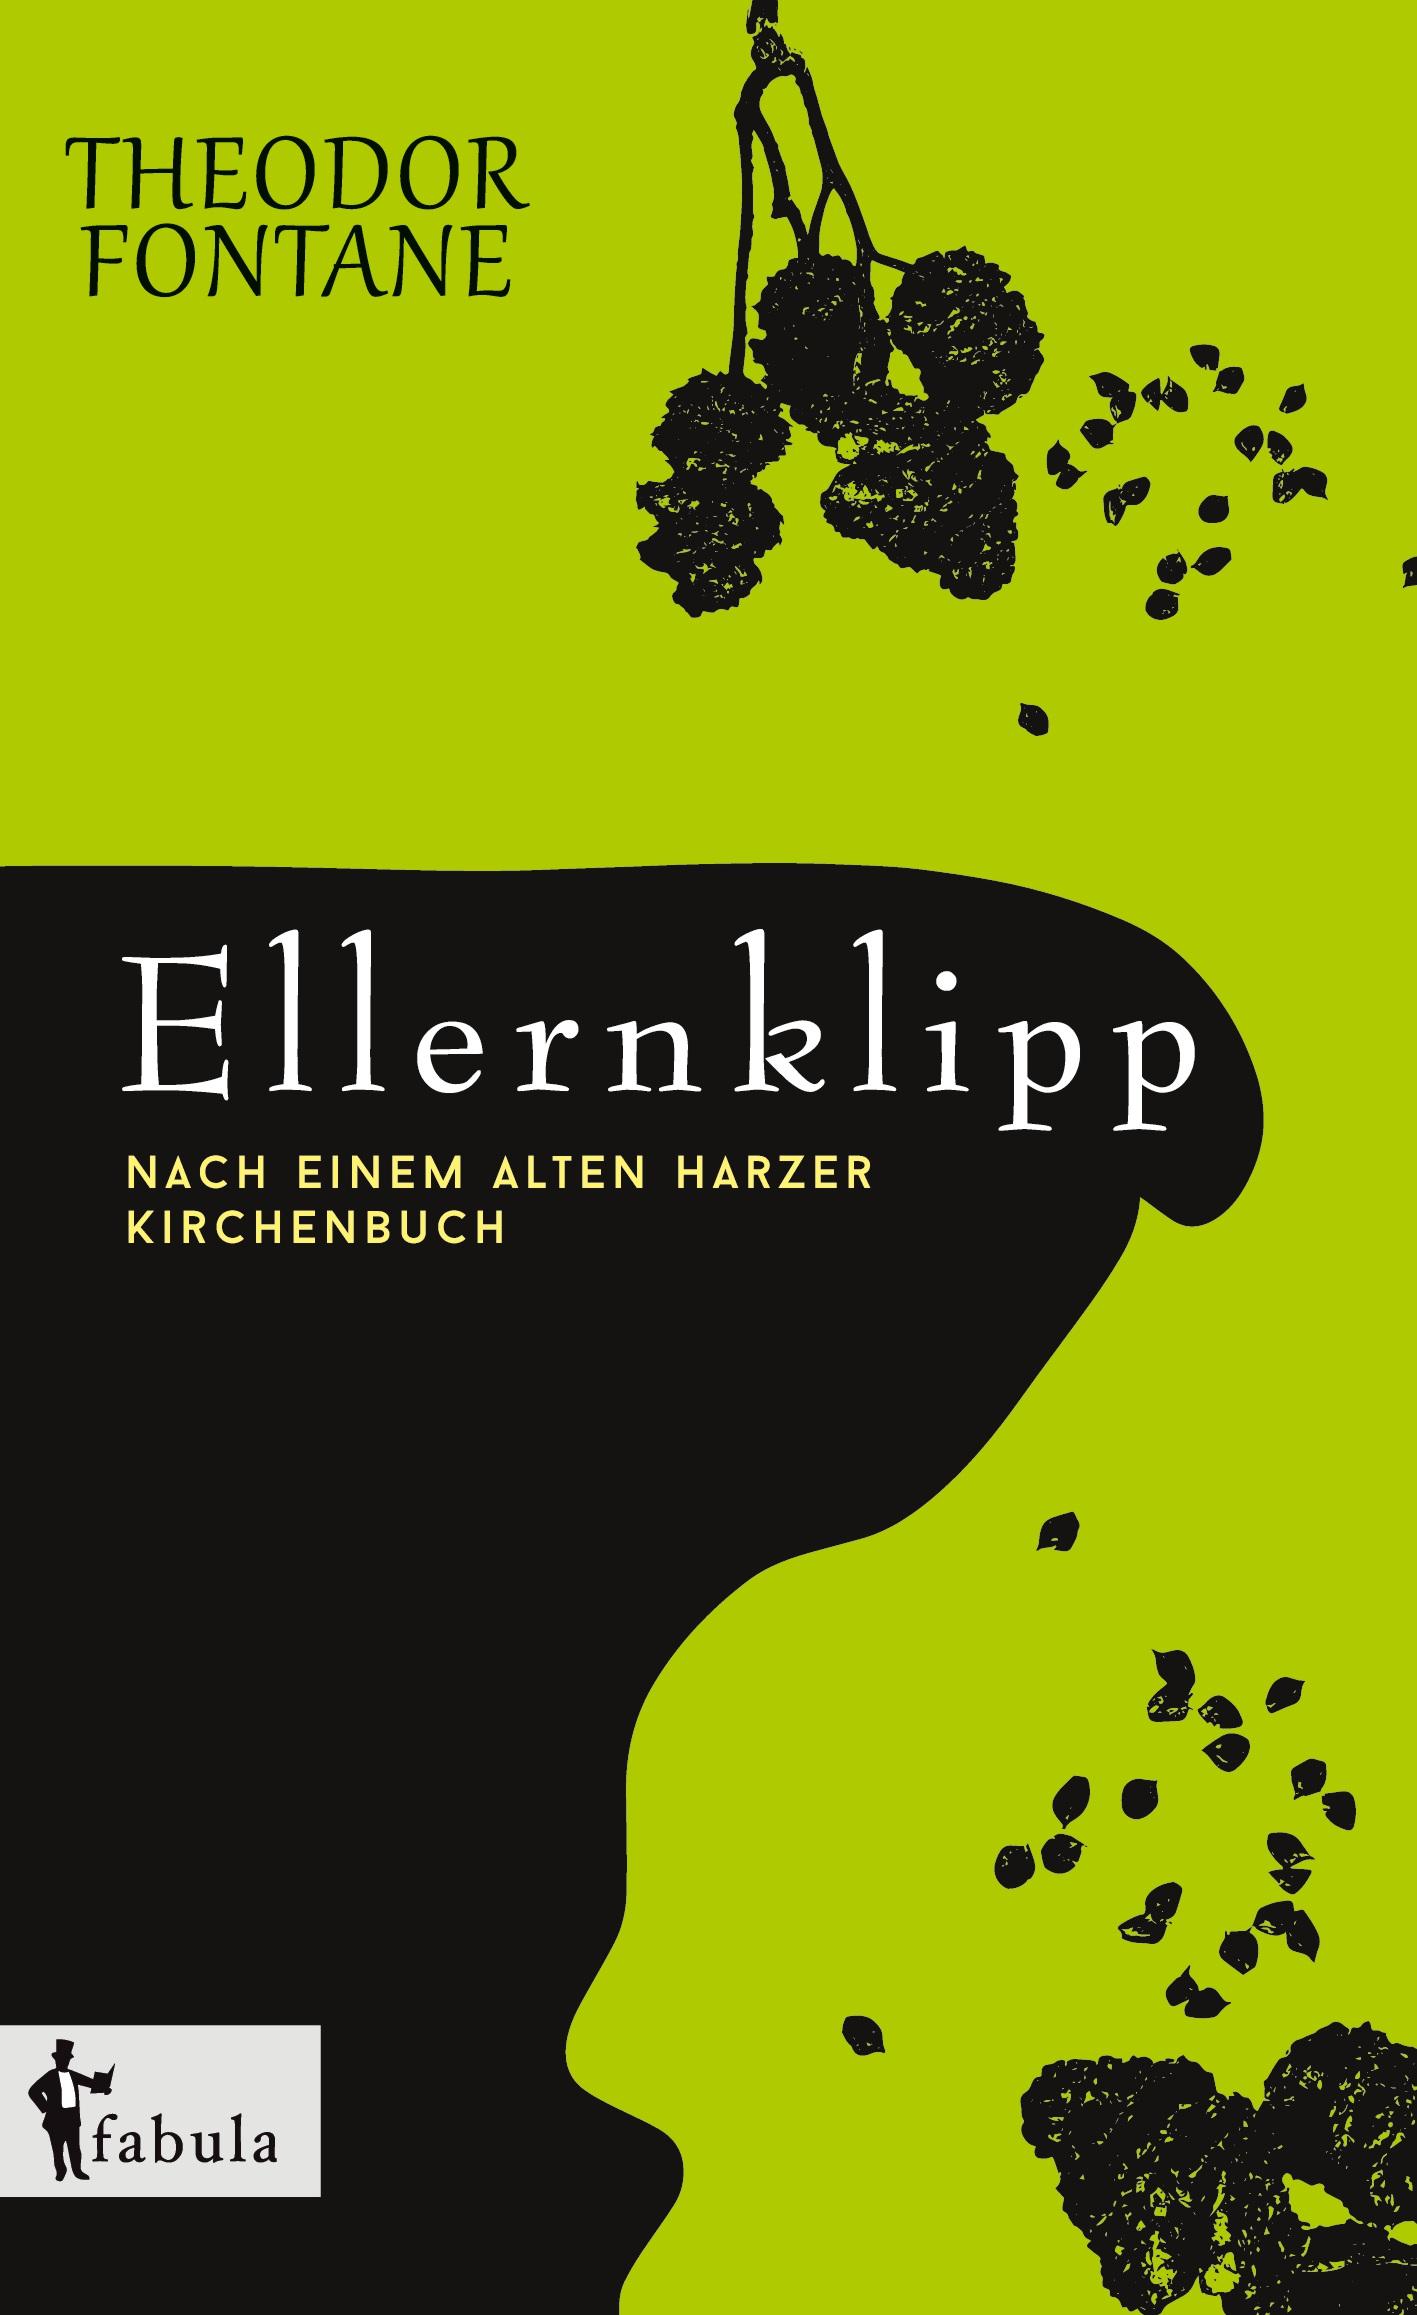 Ellernklipp: Nach einem Harzer Kirchenbuch - Fontane, Theodor